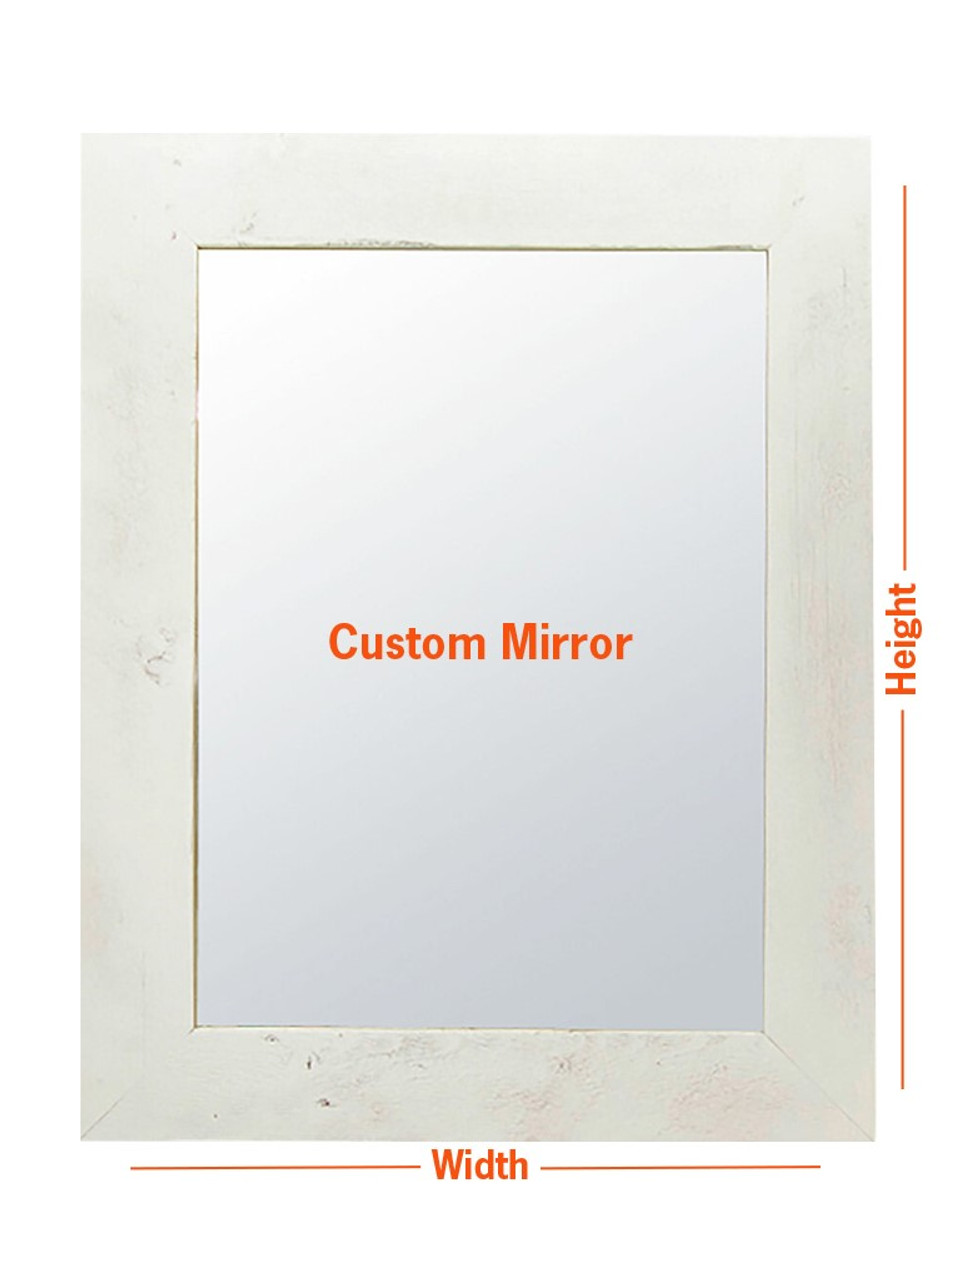 Ondraaglijk plank aanplakbiljet DRAKESTONE Custom Barnwood Mirror, White Wash